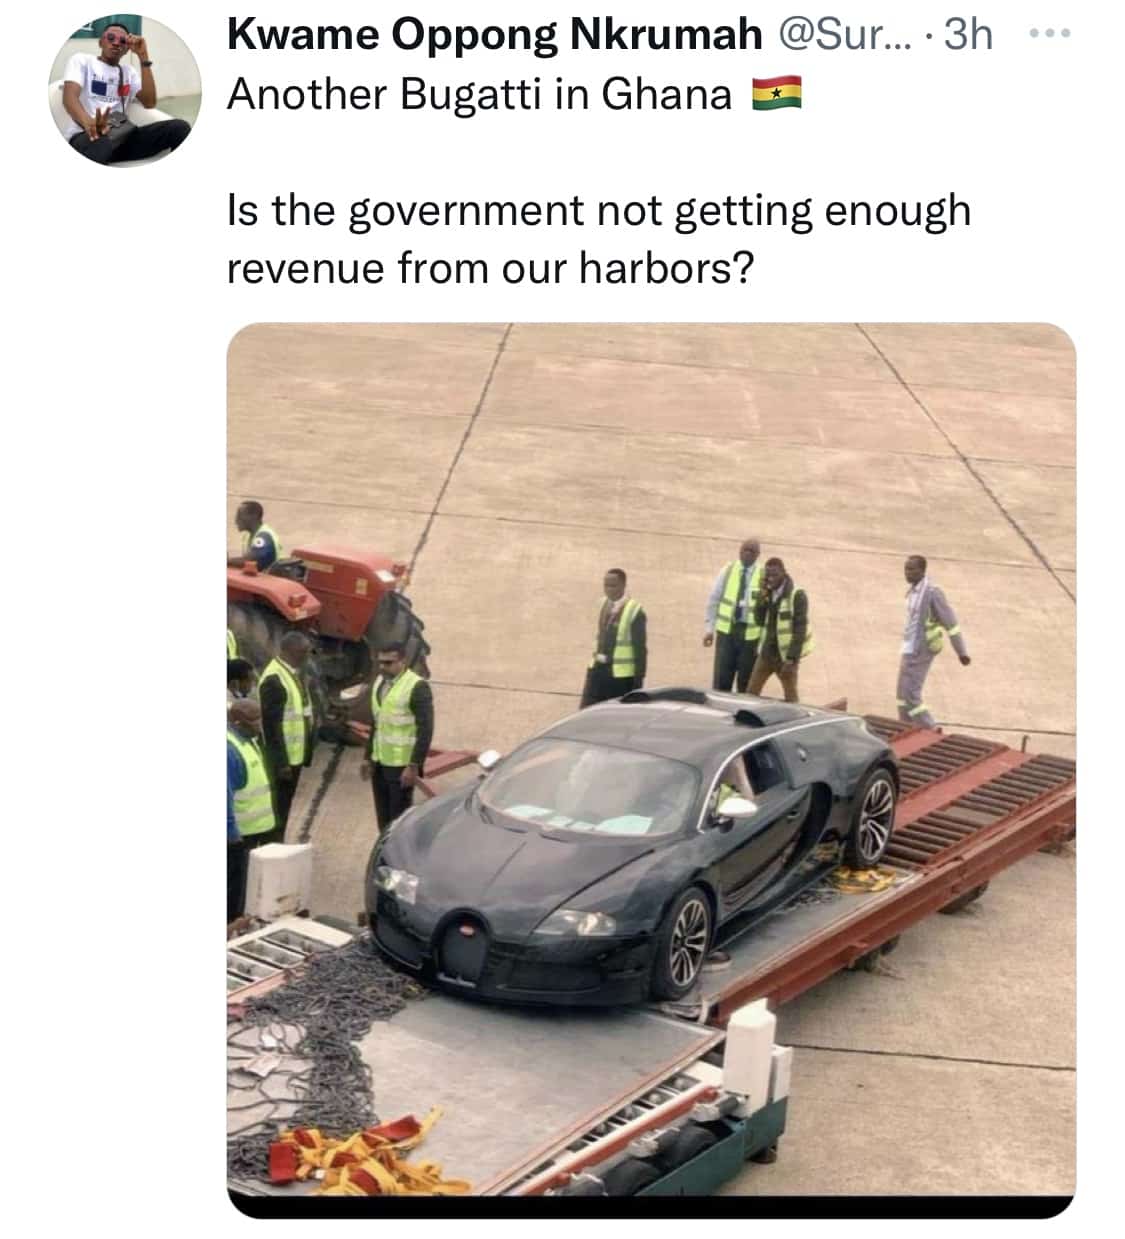 Bugatti in Ghana